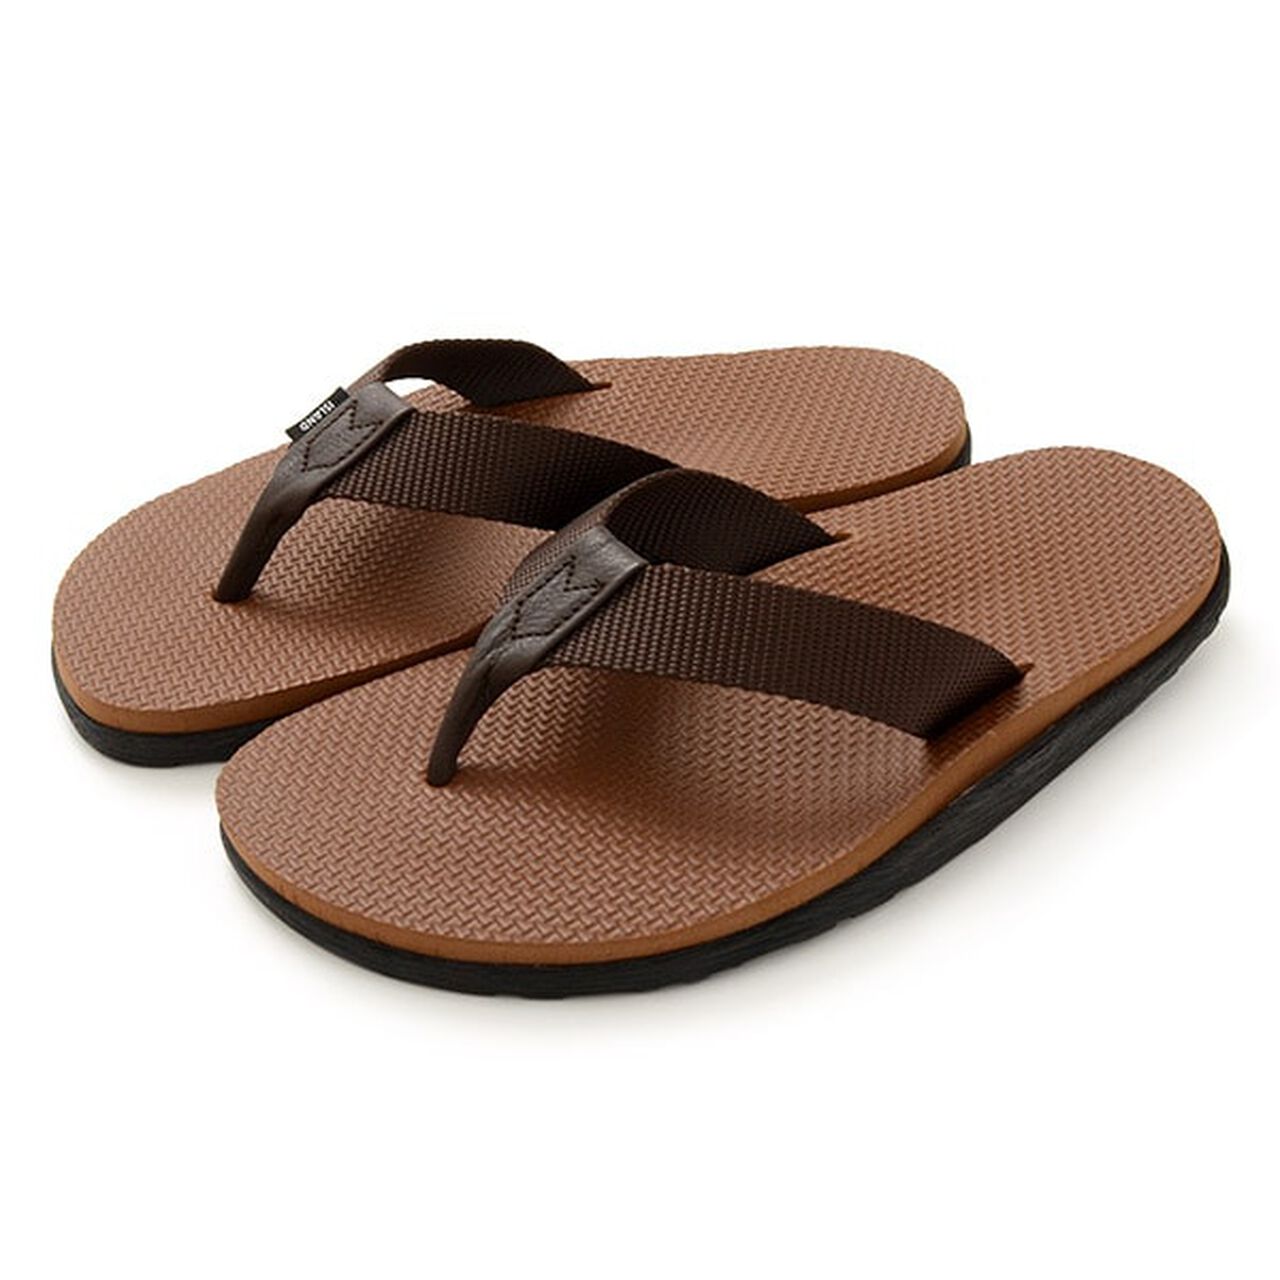 Nylon Sandals,Brown, large image number 0